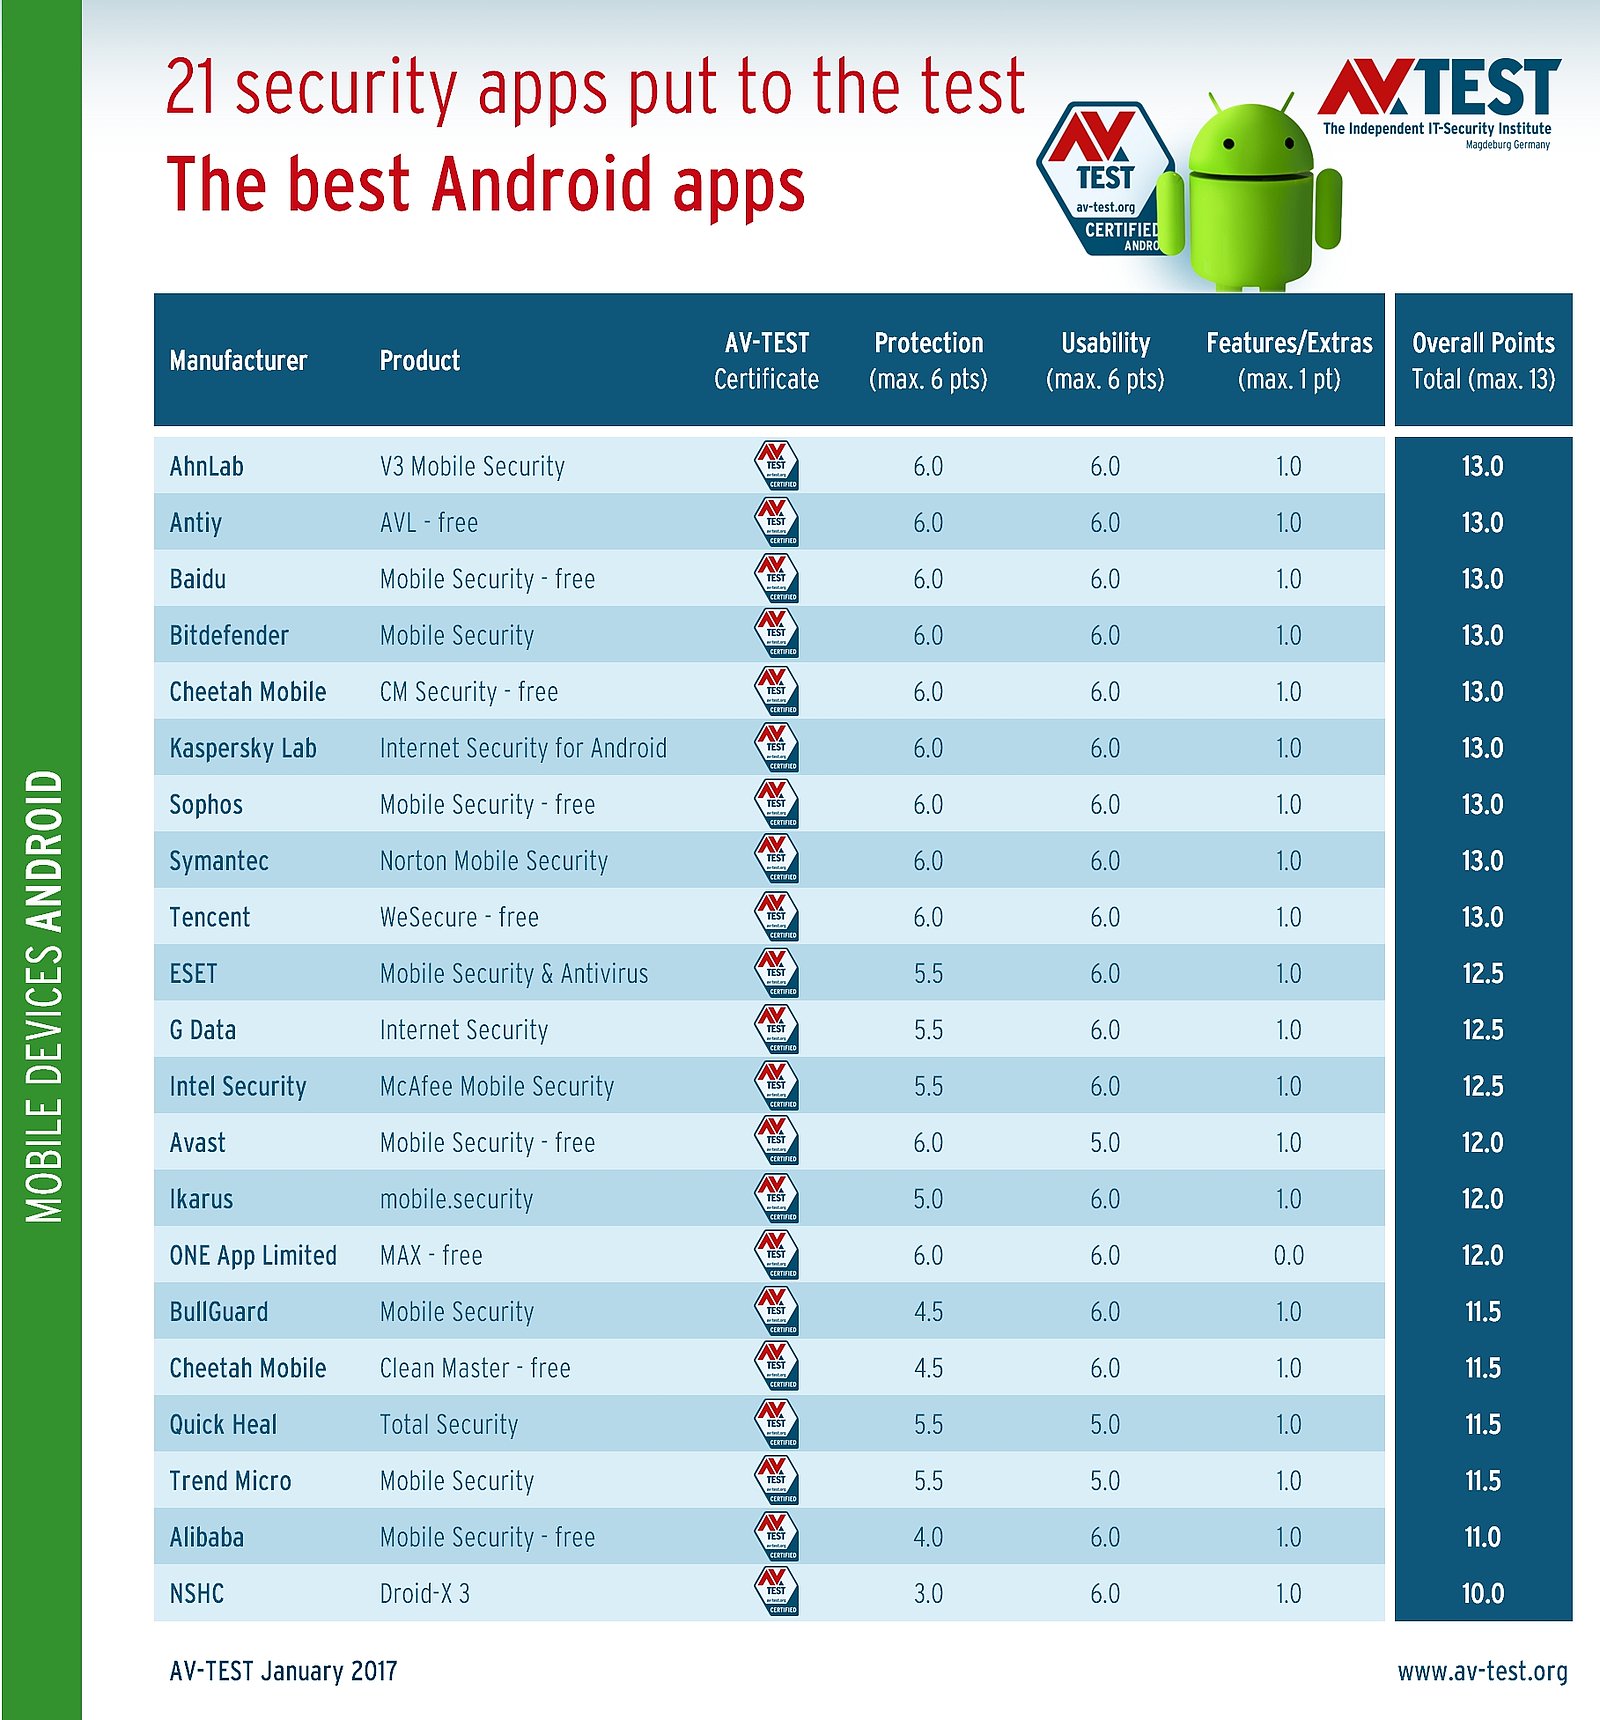 best antivirus programs for android